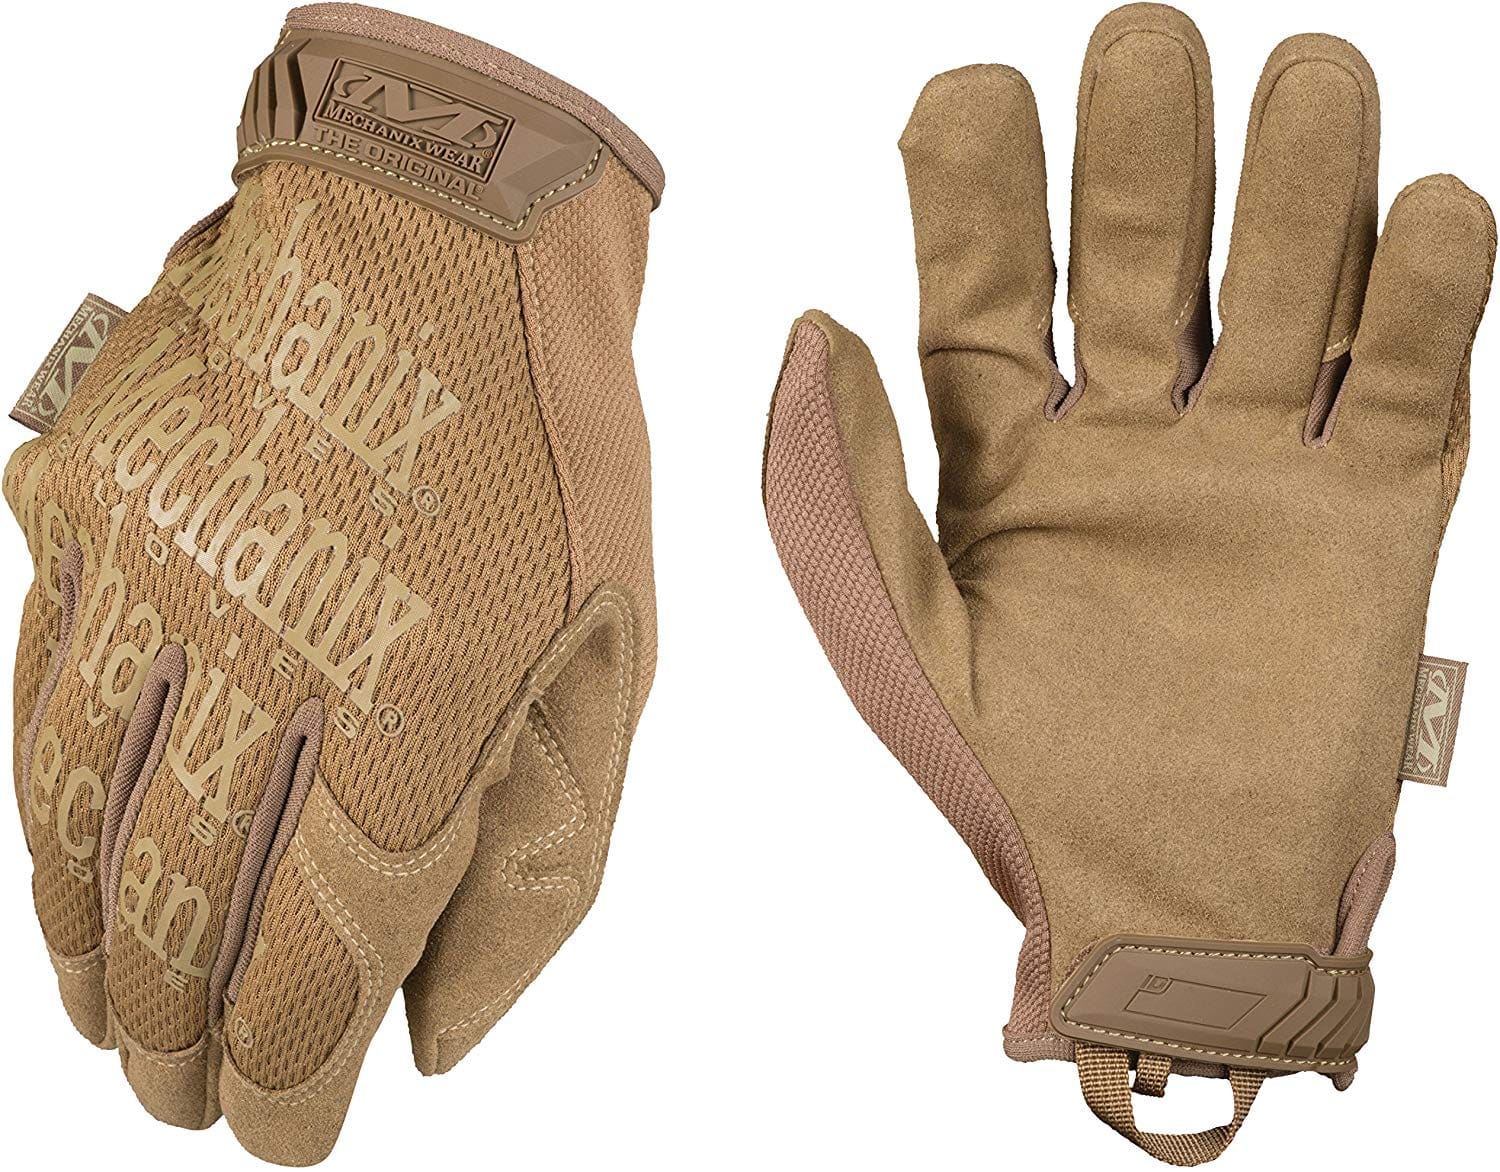 Mechanix Original Tactical Shooting Gloves